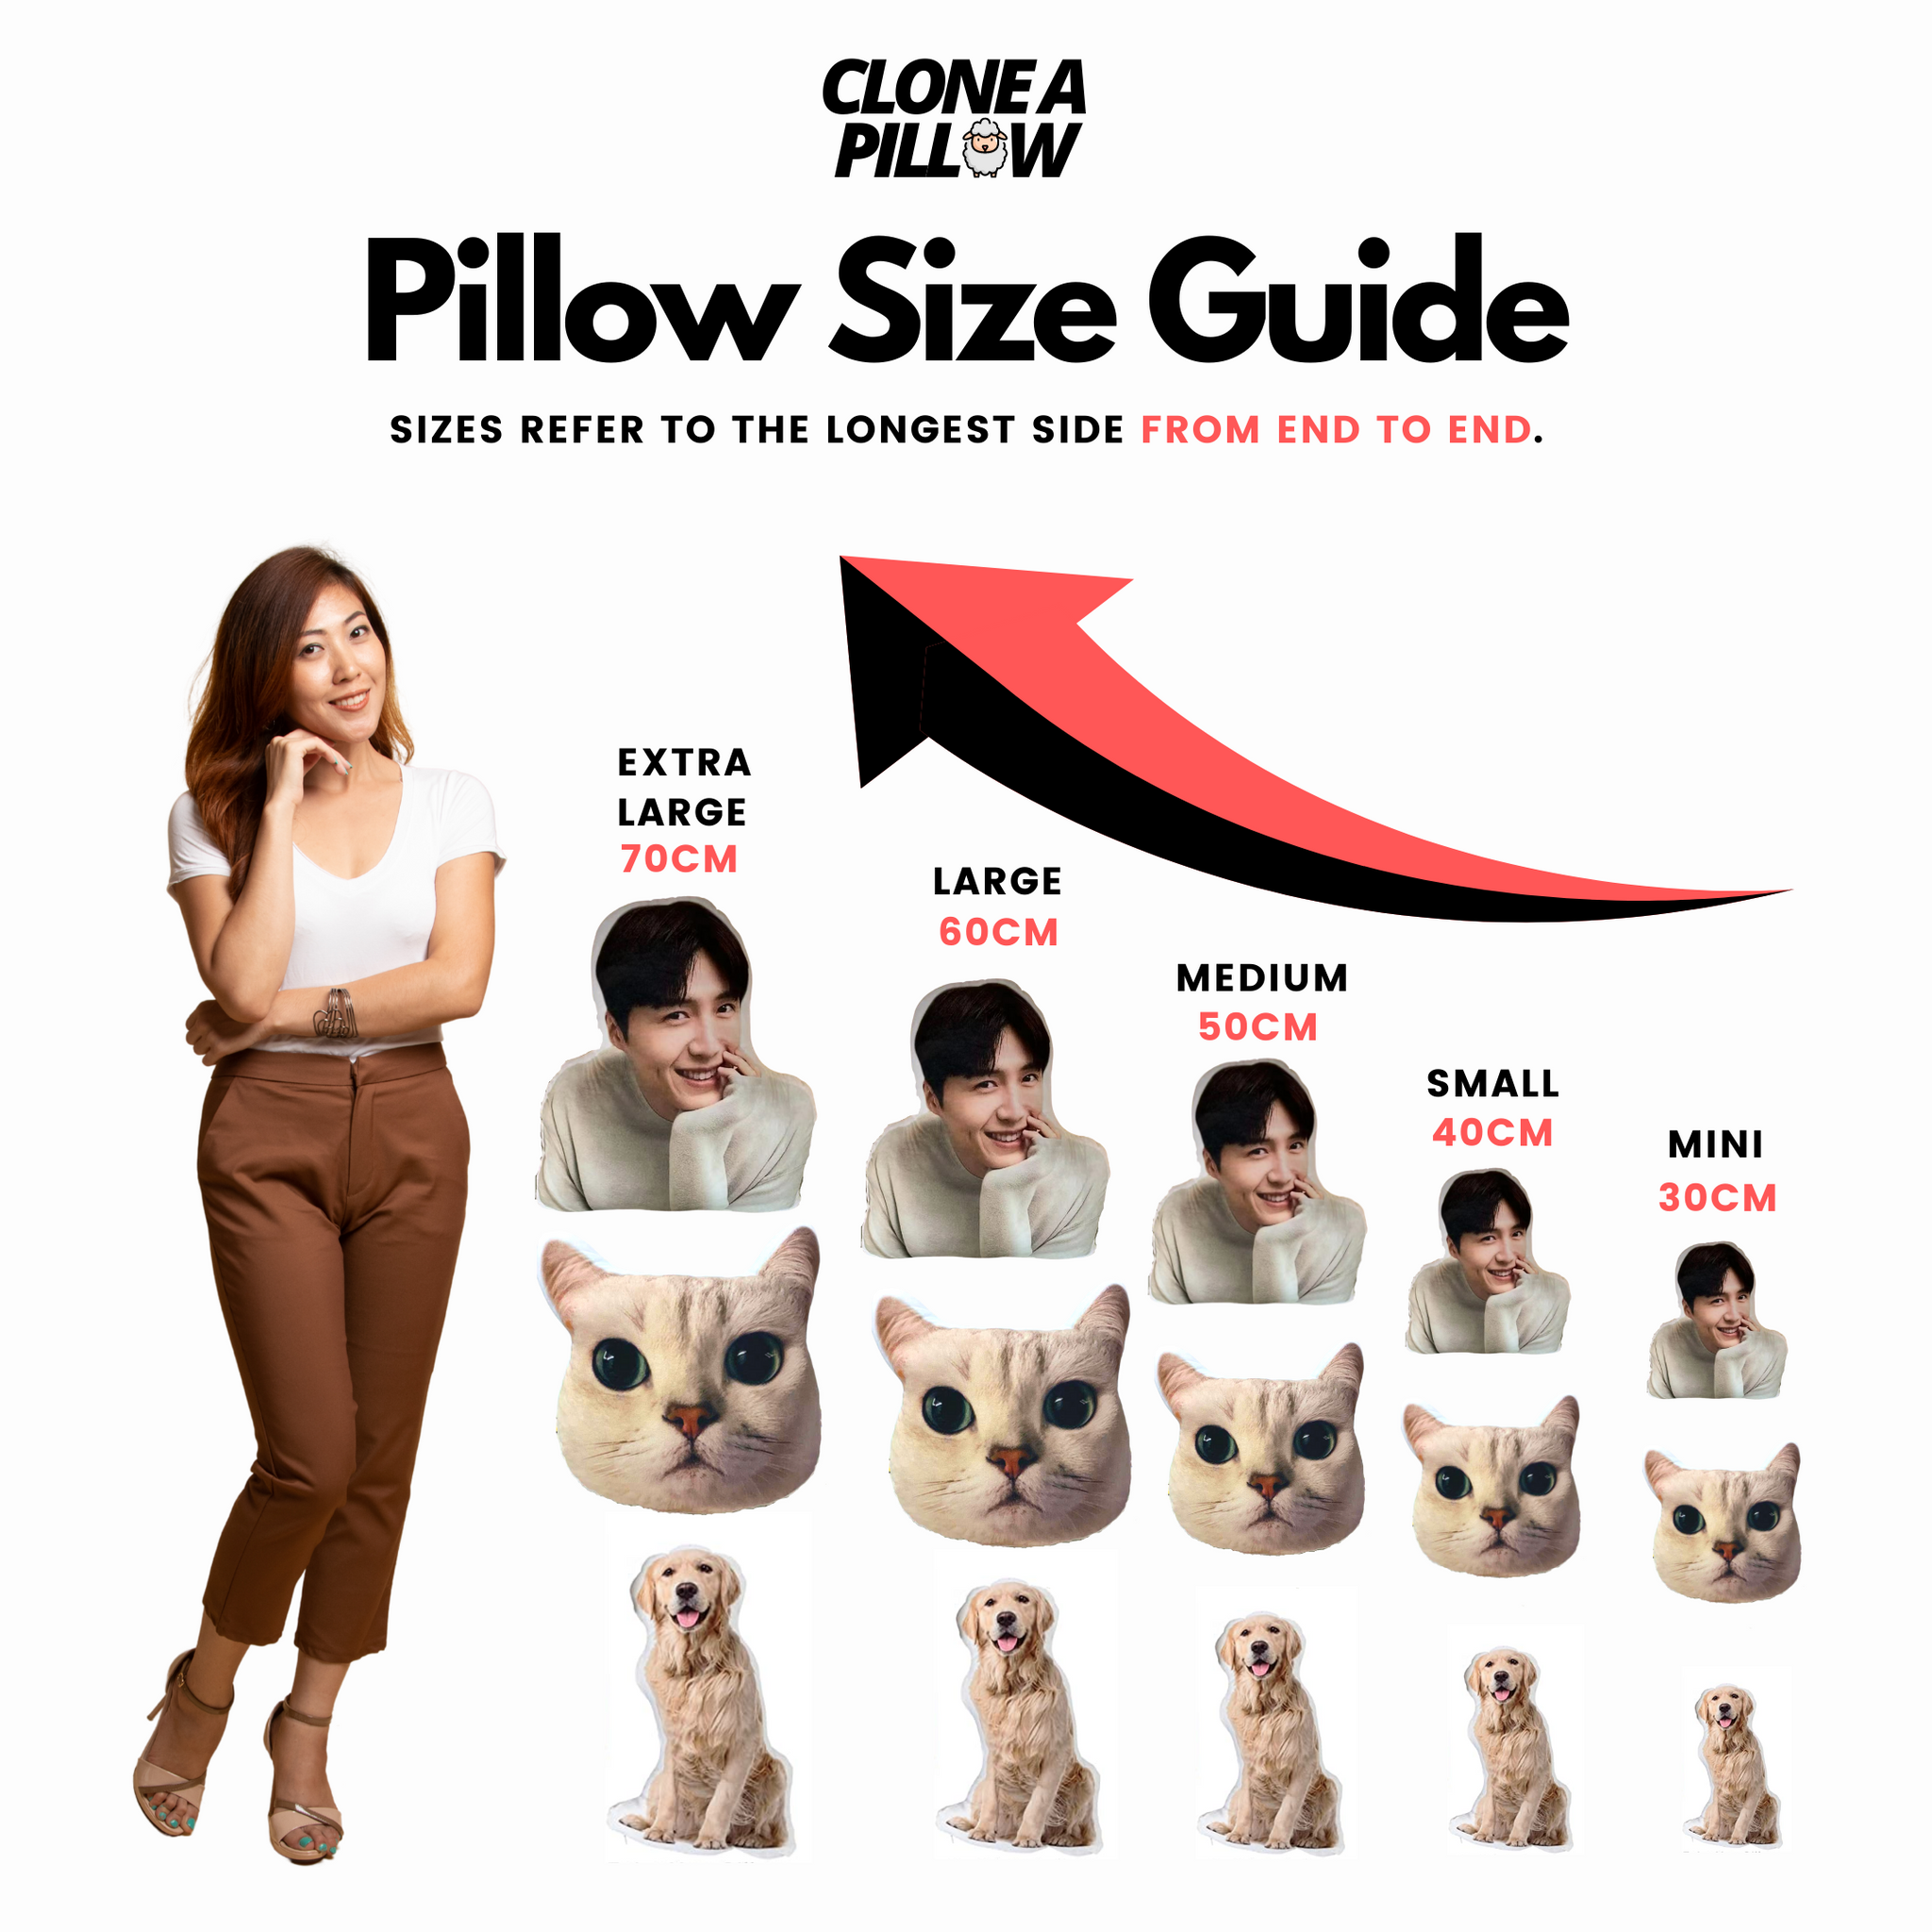 Clone a Human into a Pillow